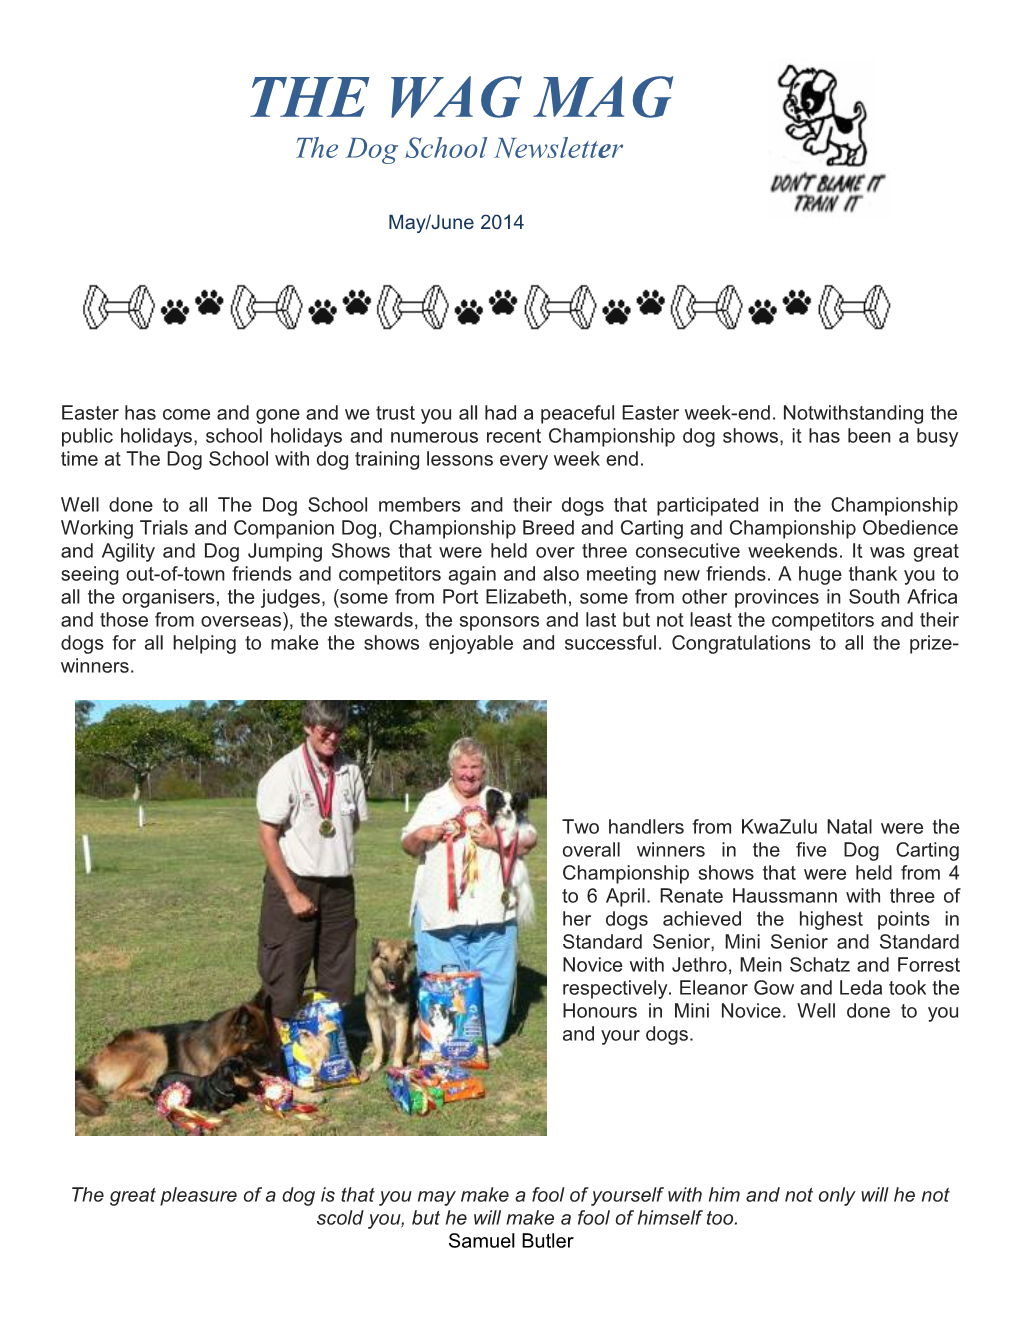 The Dog School Newsletter